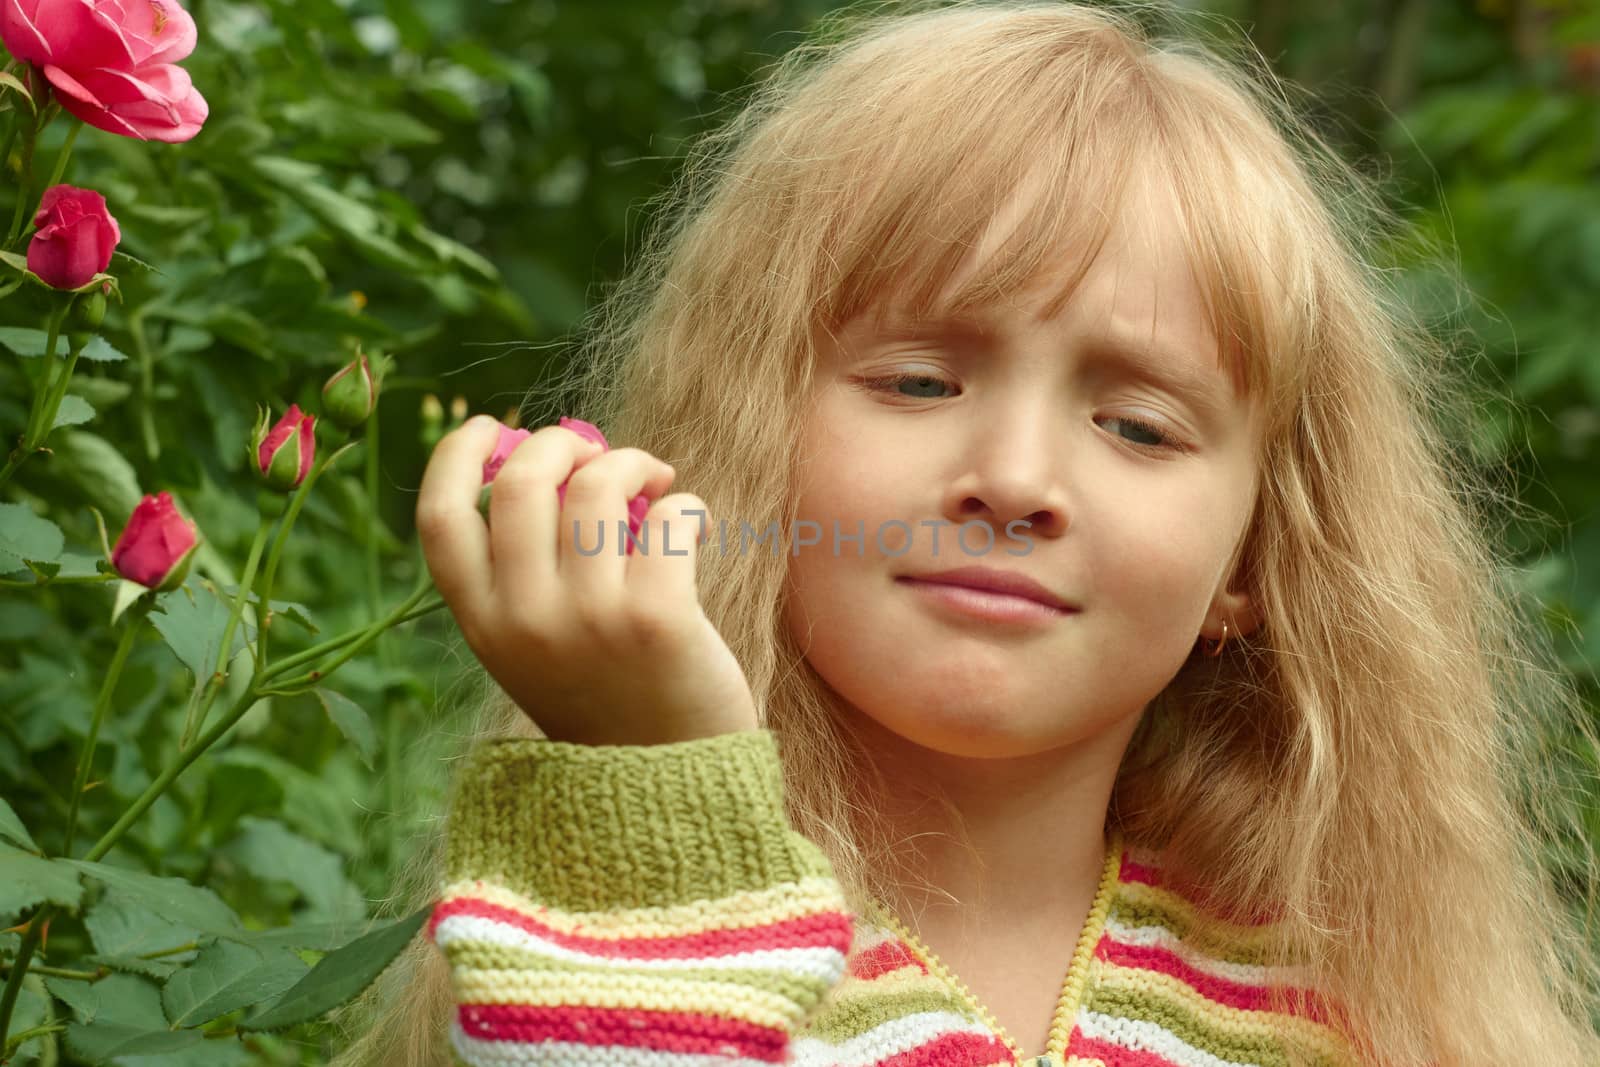 Little girl near the rose bush by qiiip